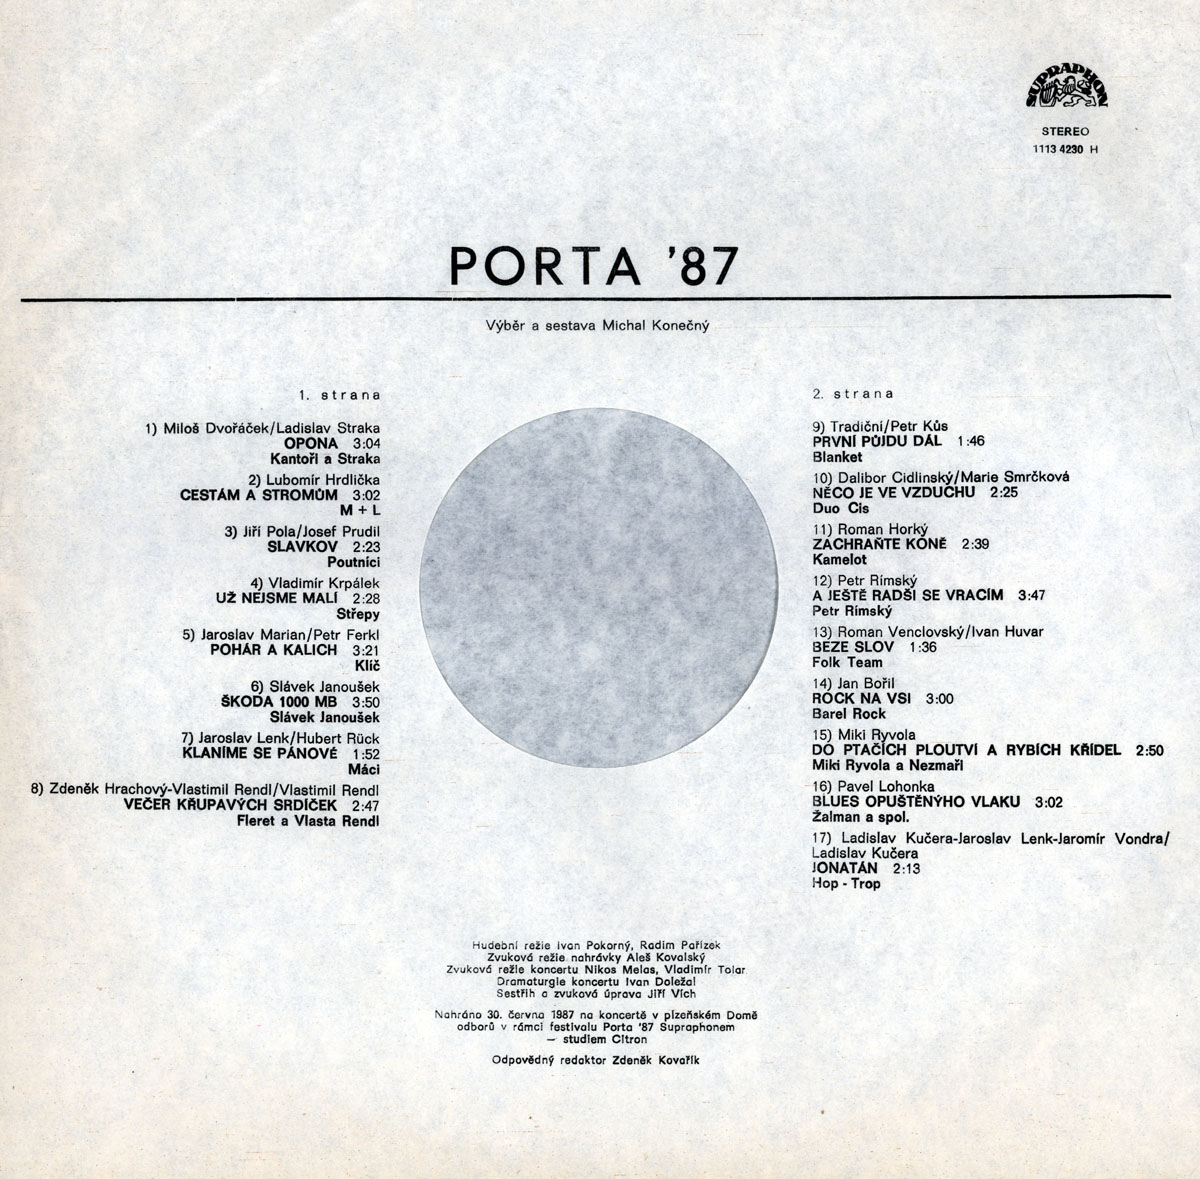 PORTA 87